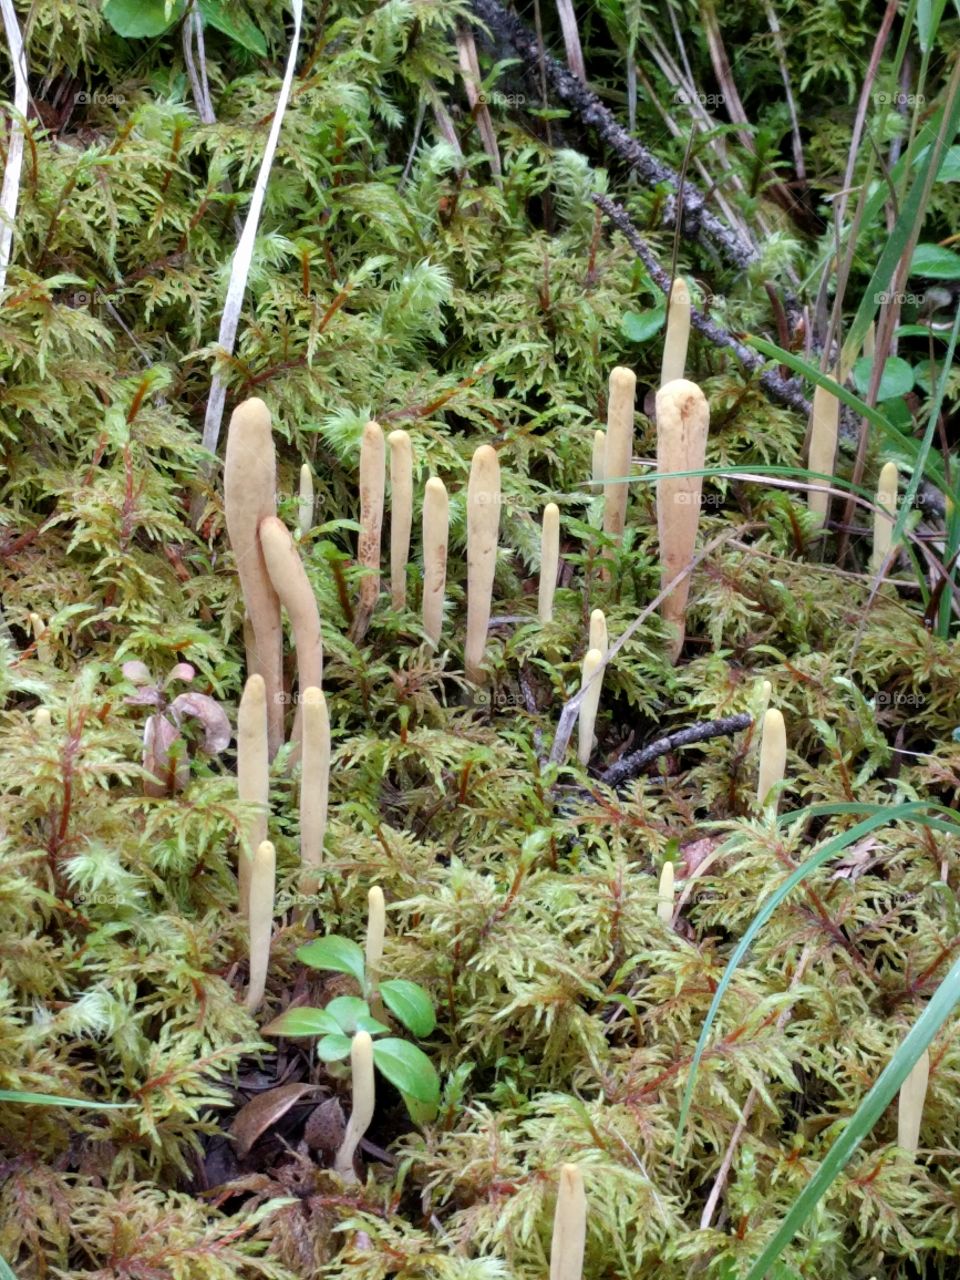 fungi in the moss